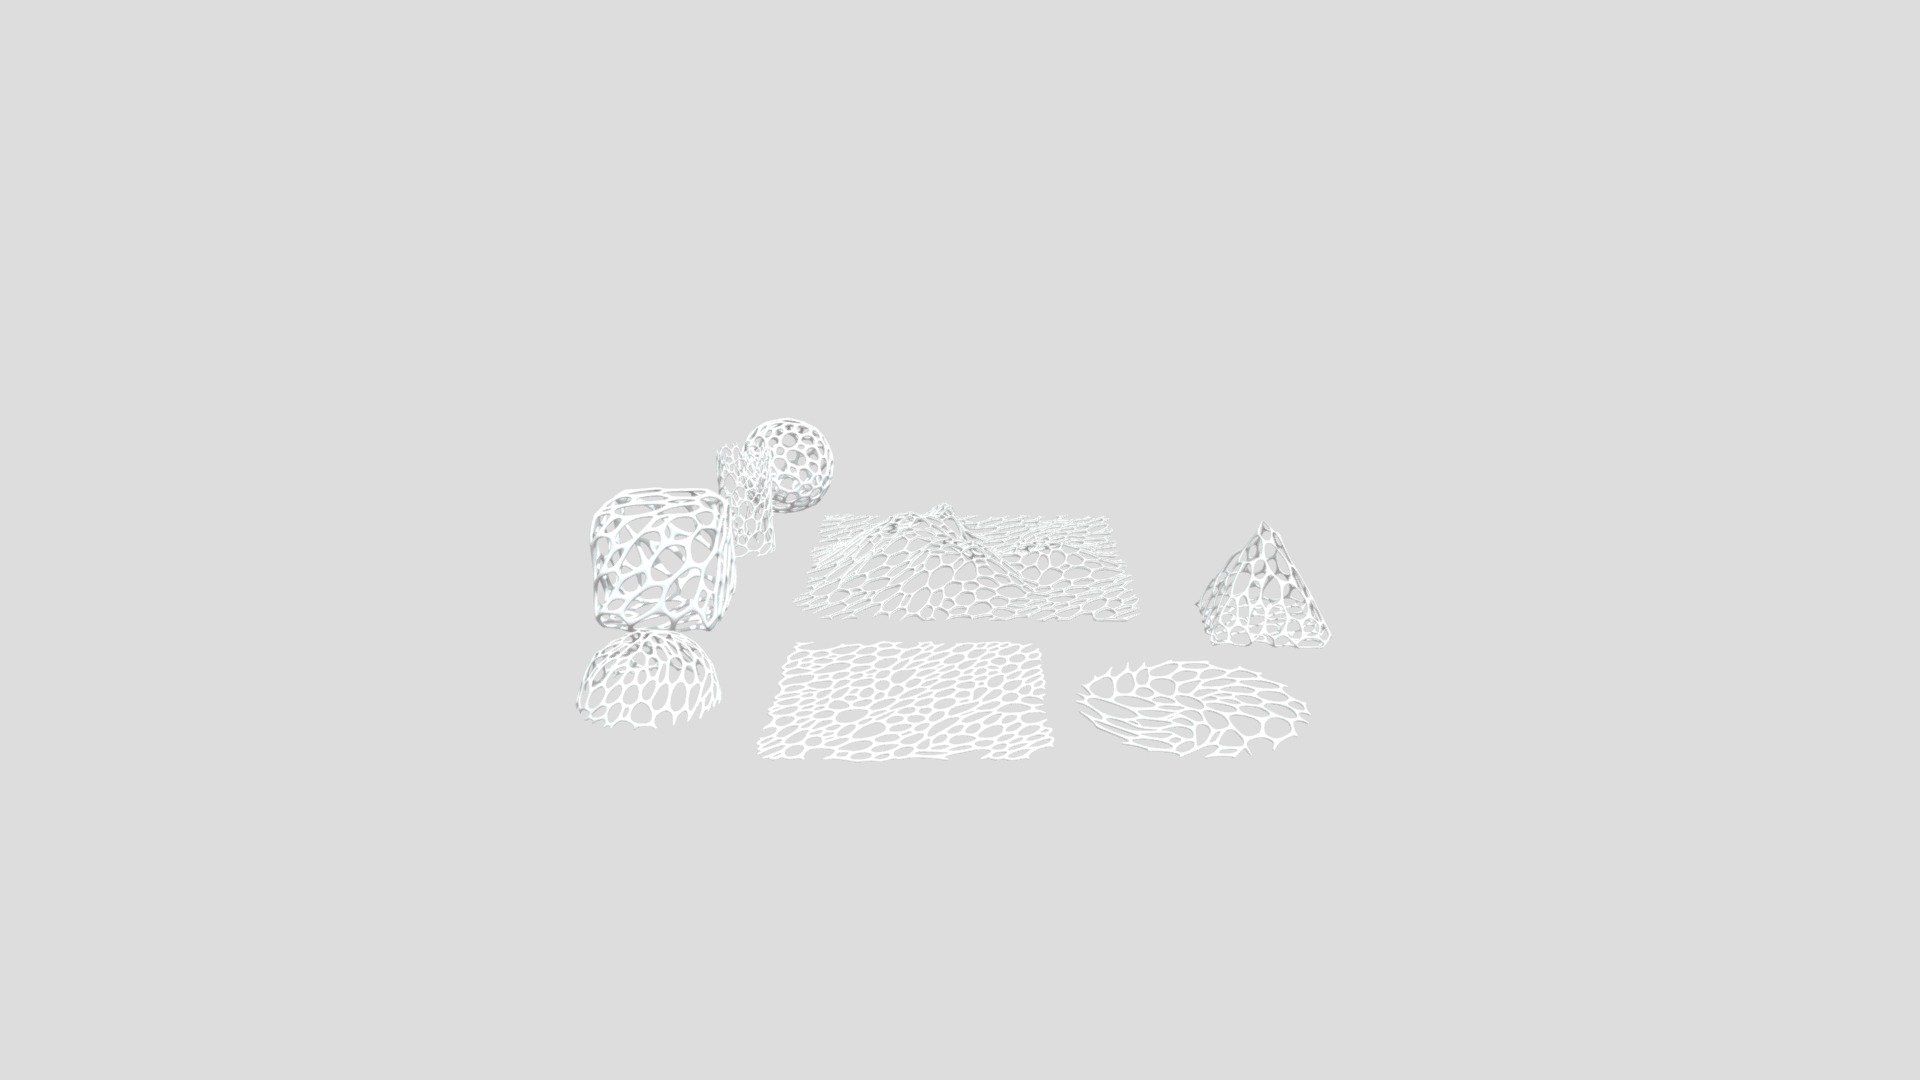 Voronoi Objects - 3D model by Lobakus [10185bf] - Sketchfab